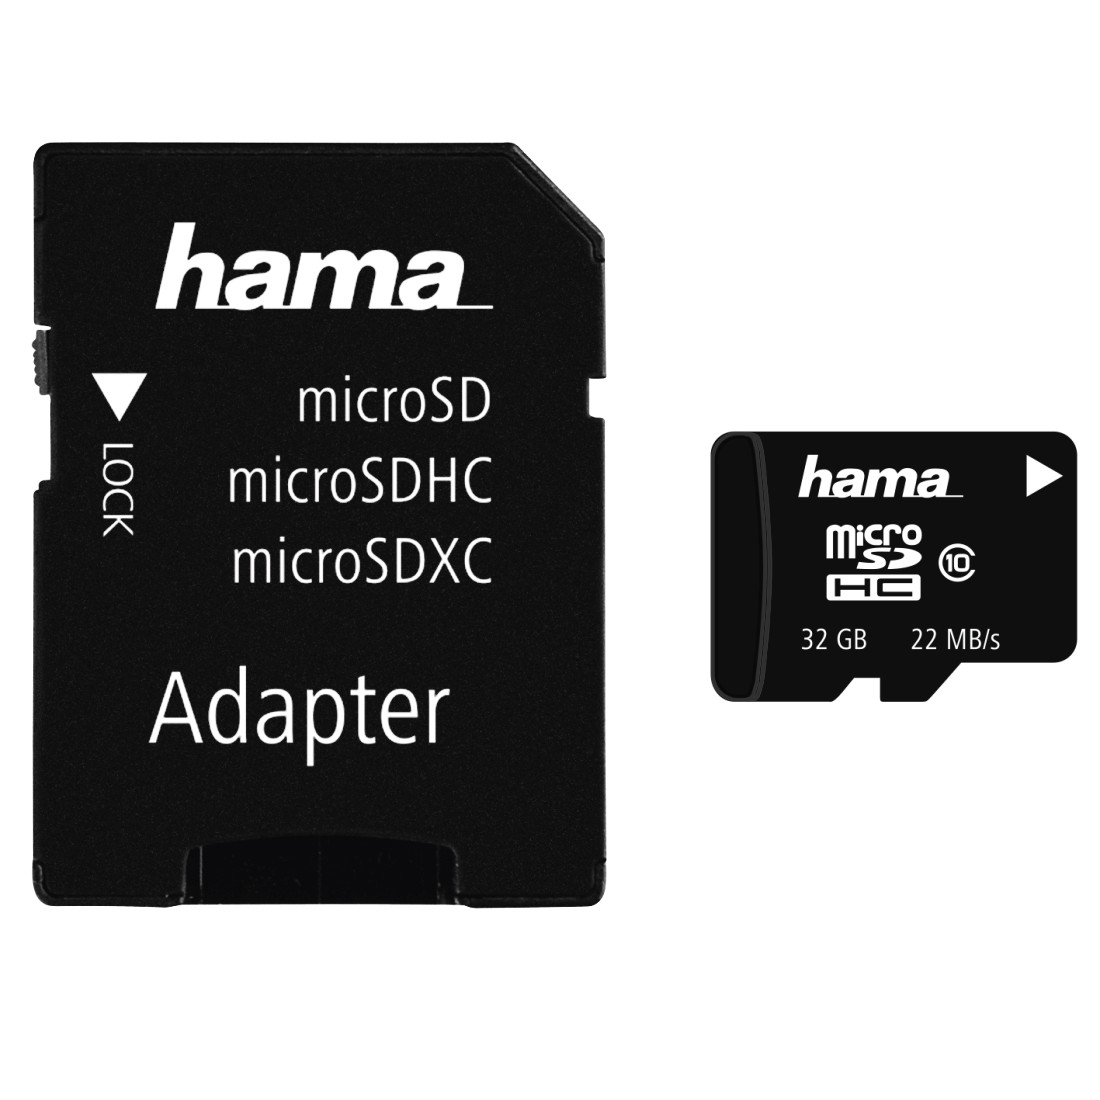 You Recently Viewed Hama 32GB Class 10 microSDHC, 22MBs Image